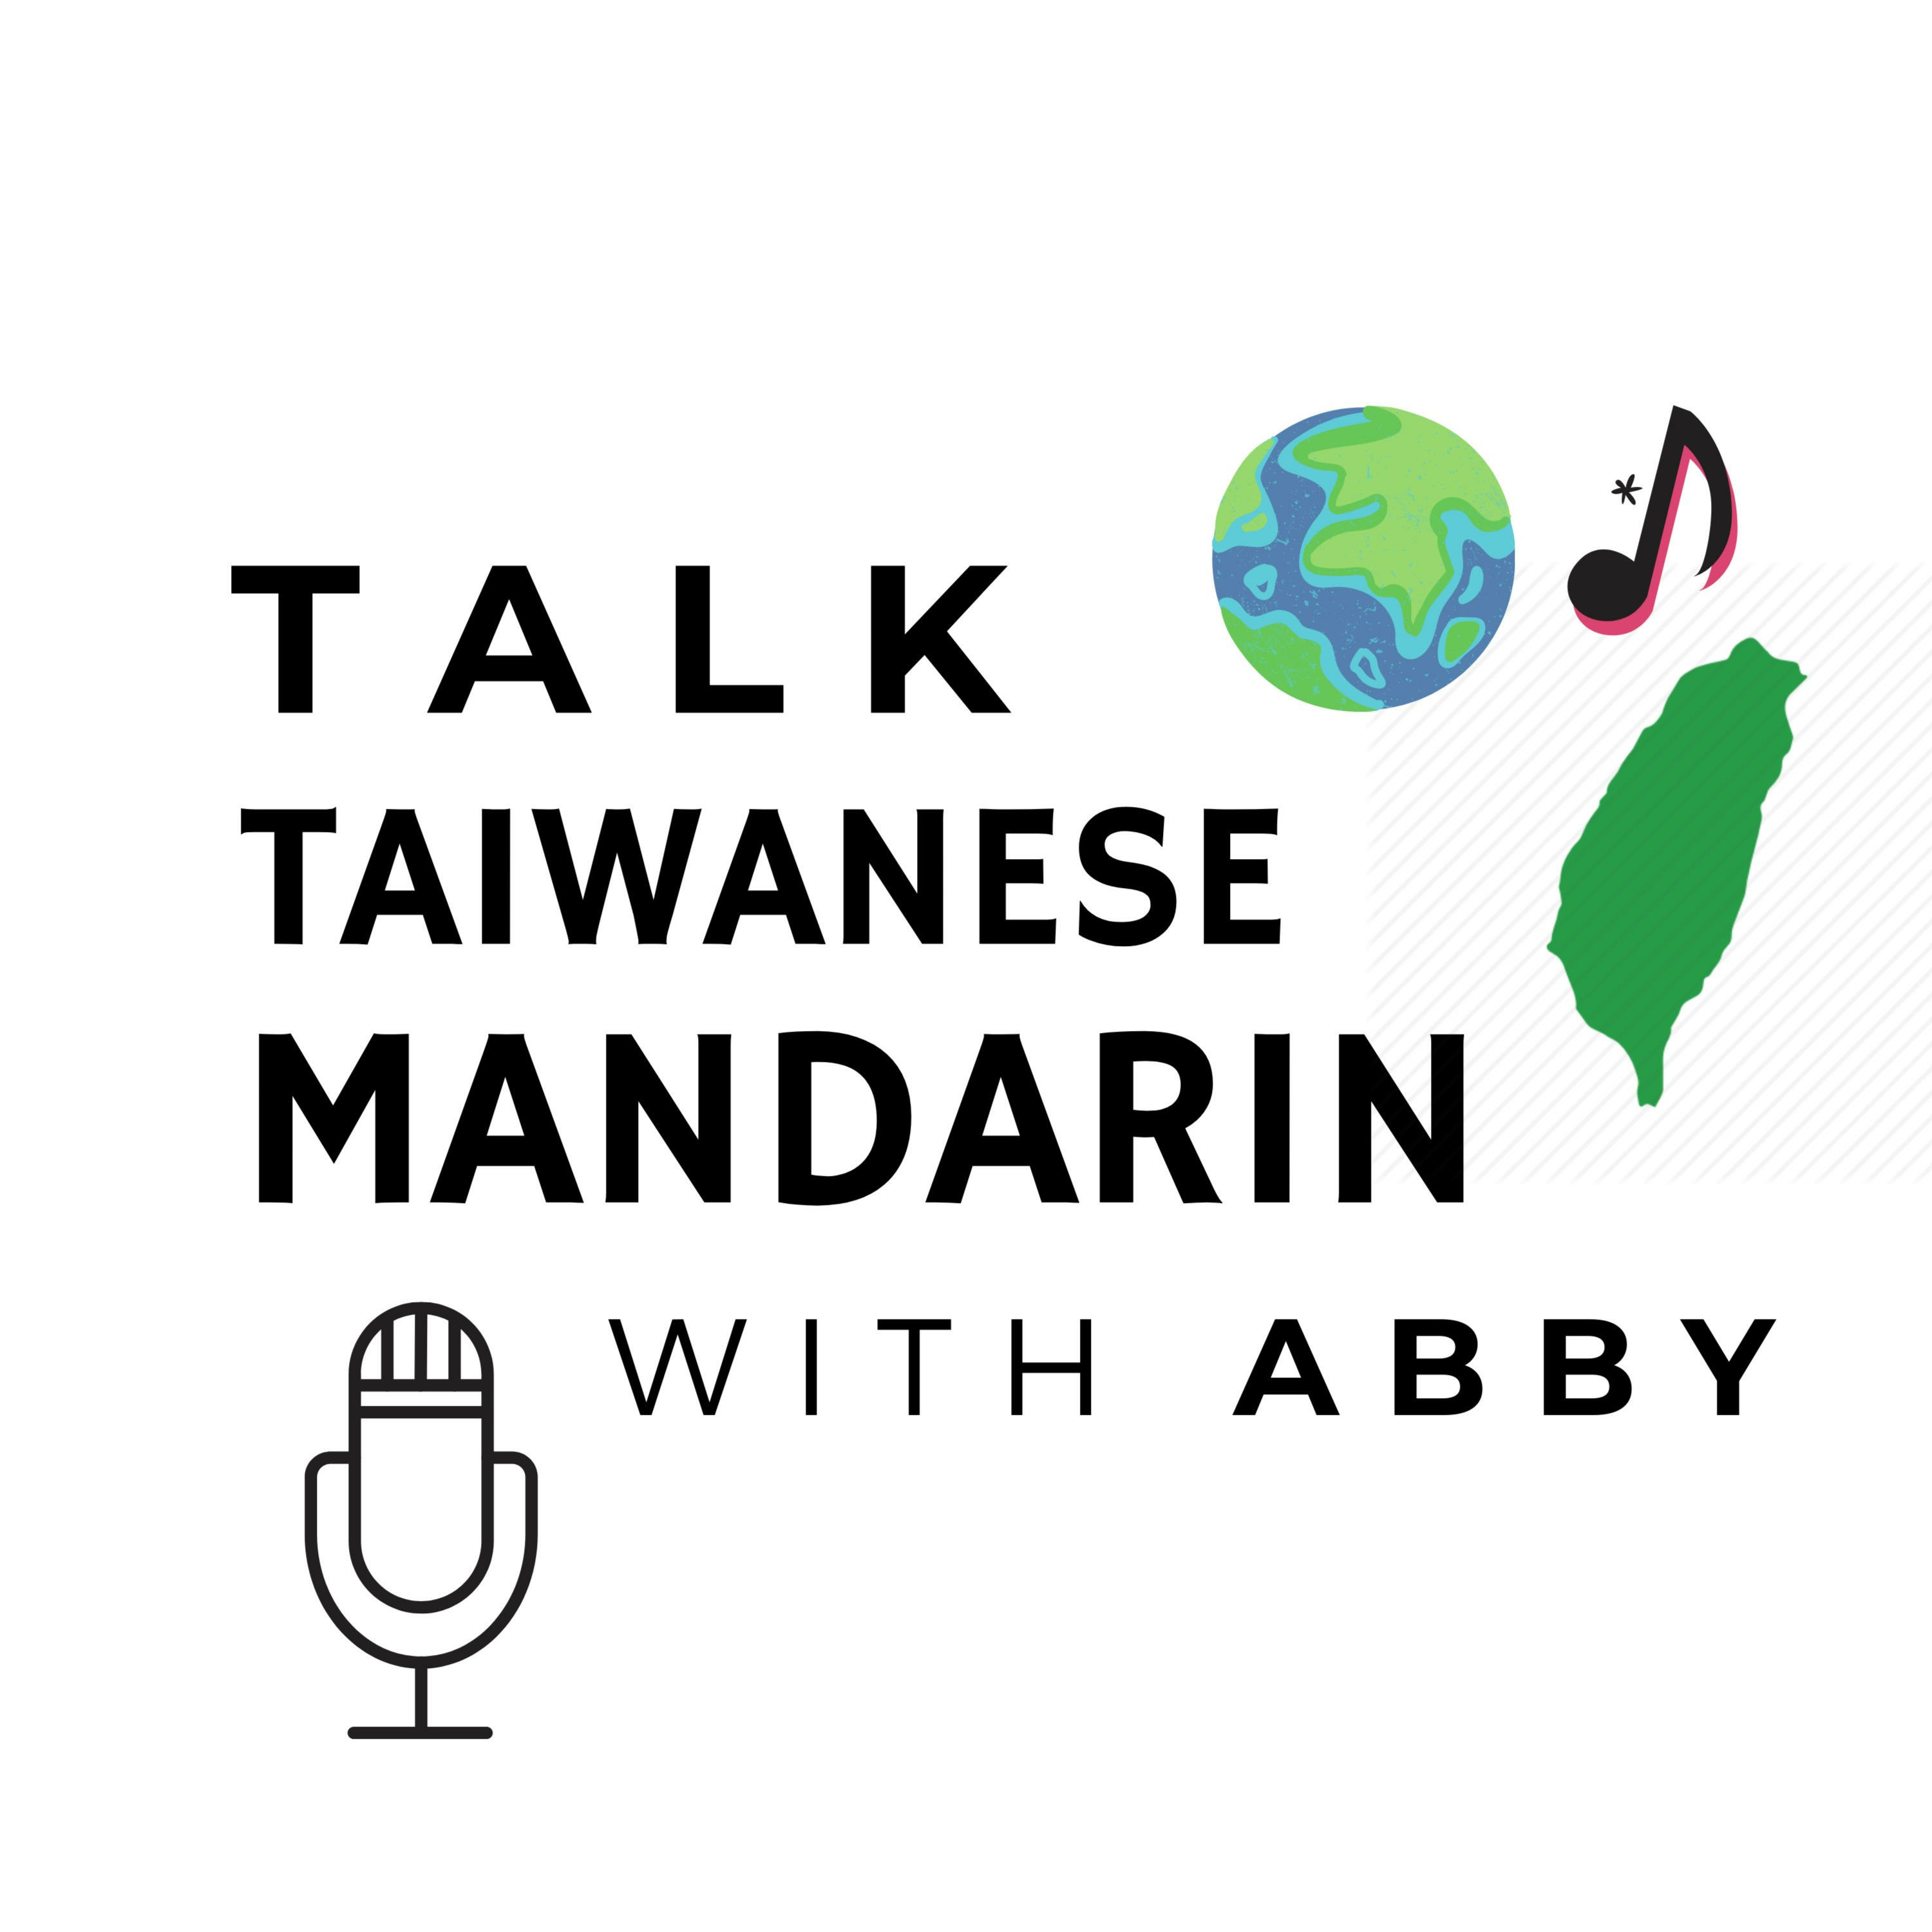 Talk Taiwanese Mandarin with Abby